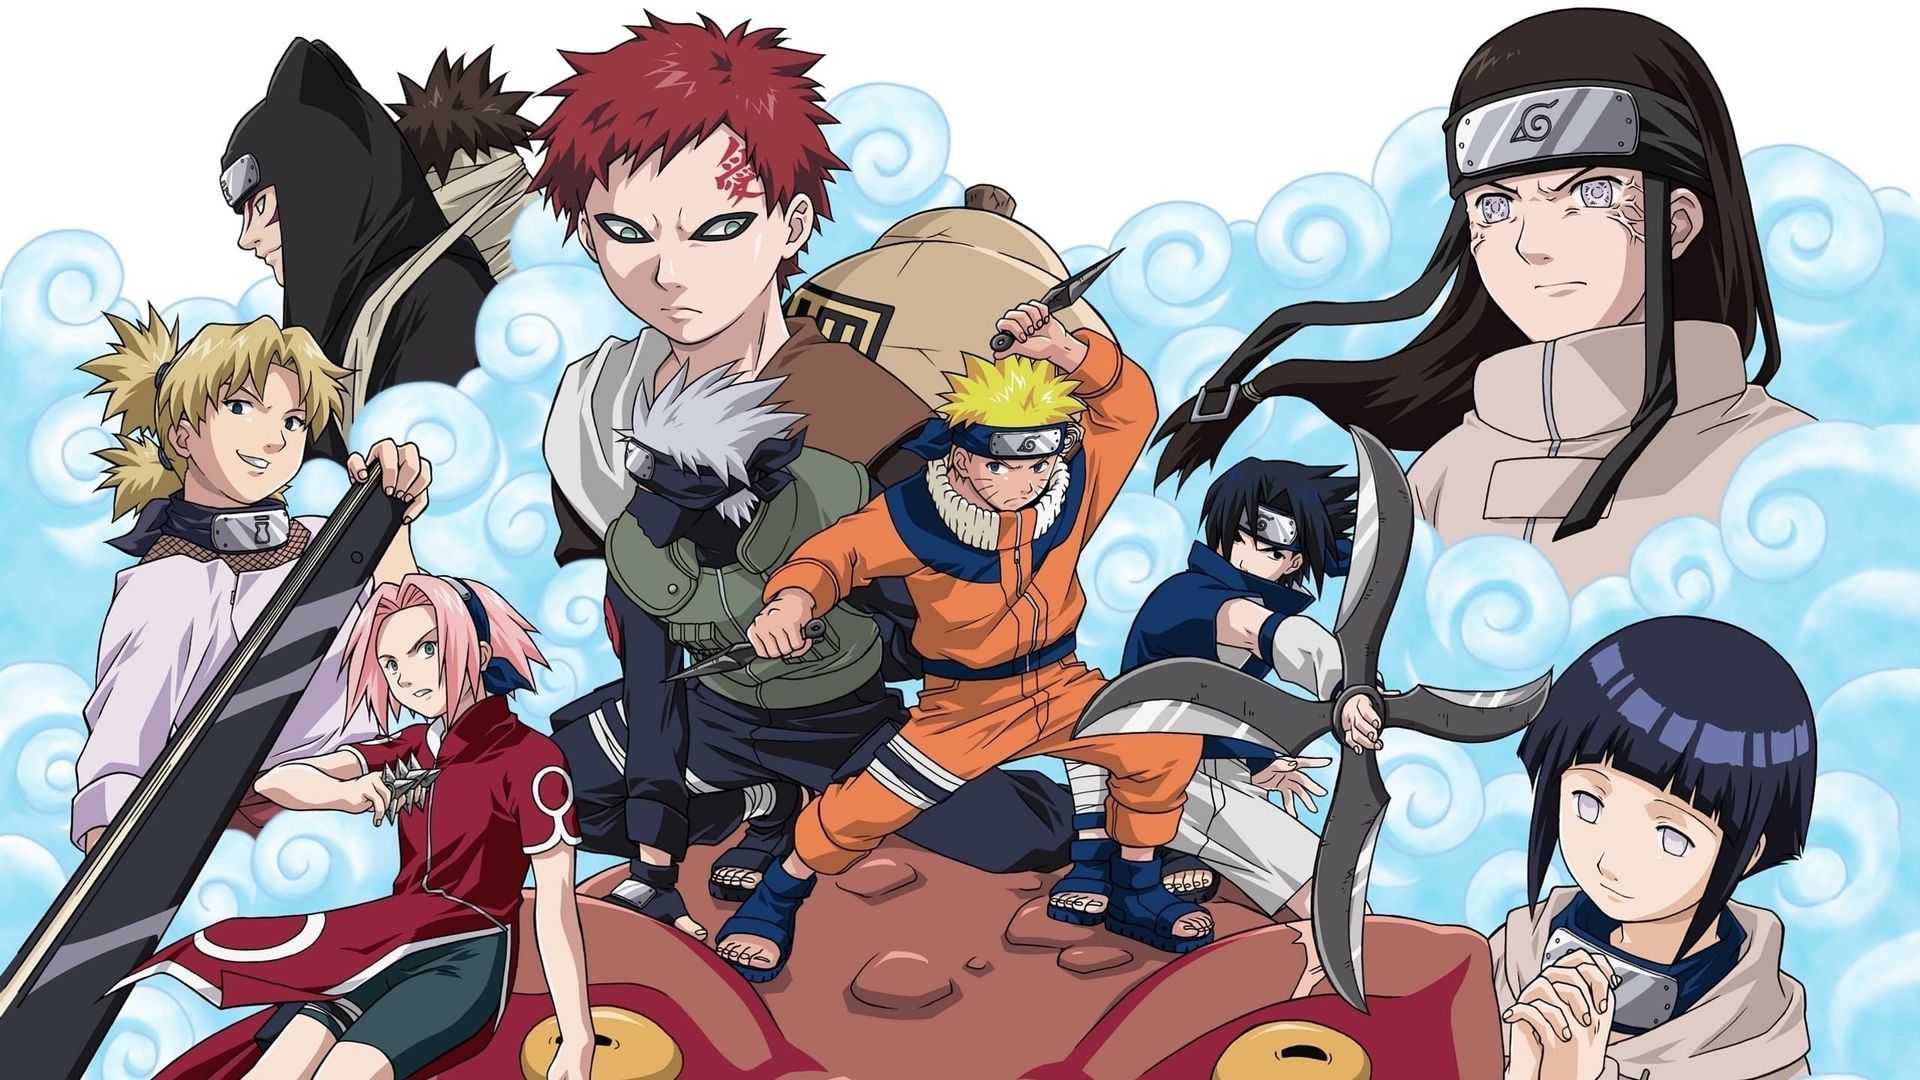 Watch Naruto Shippuden Season 3 Episode 138 - The End Online Now